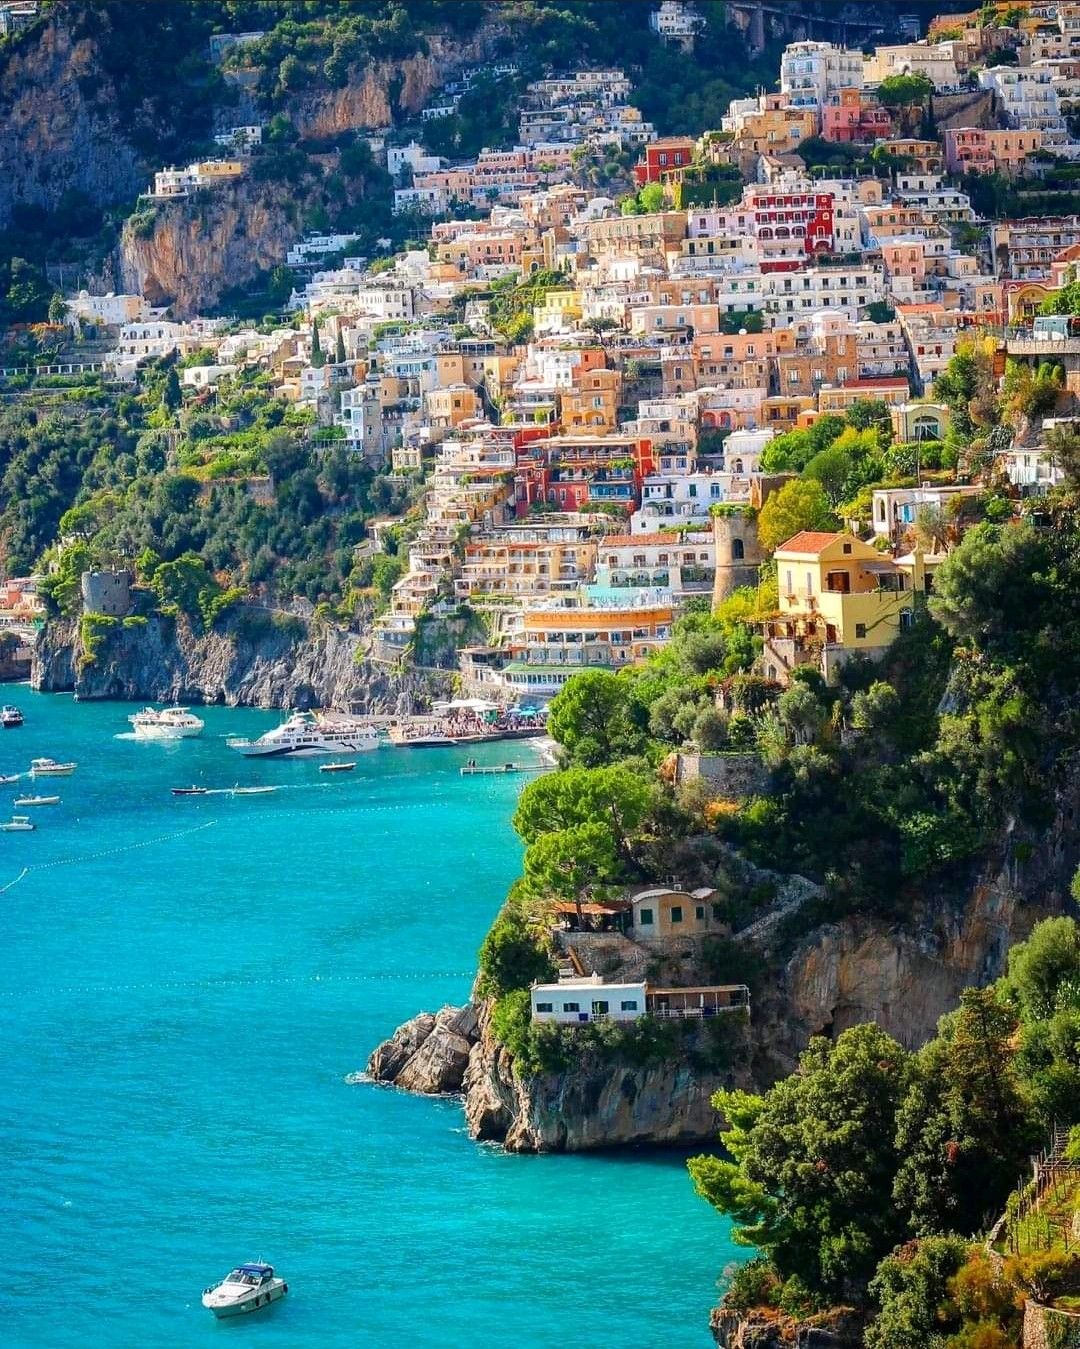 Frank Santarsia on LinkedIn: Positano, Italie 🇮🇹 ️💚 ️😍😃To Find The Most ...